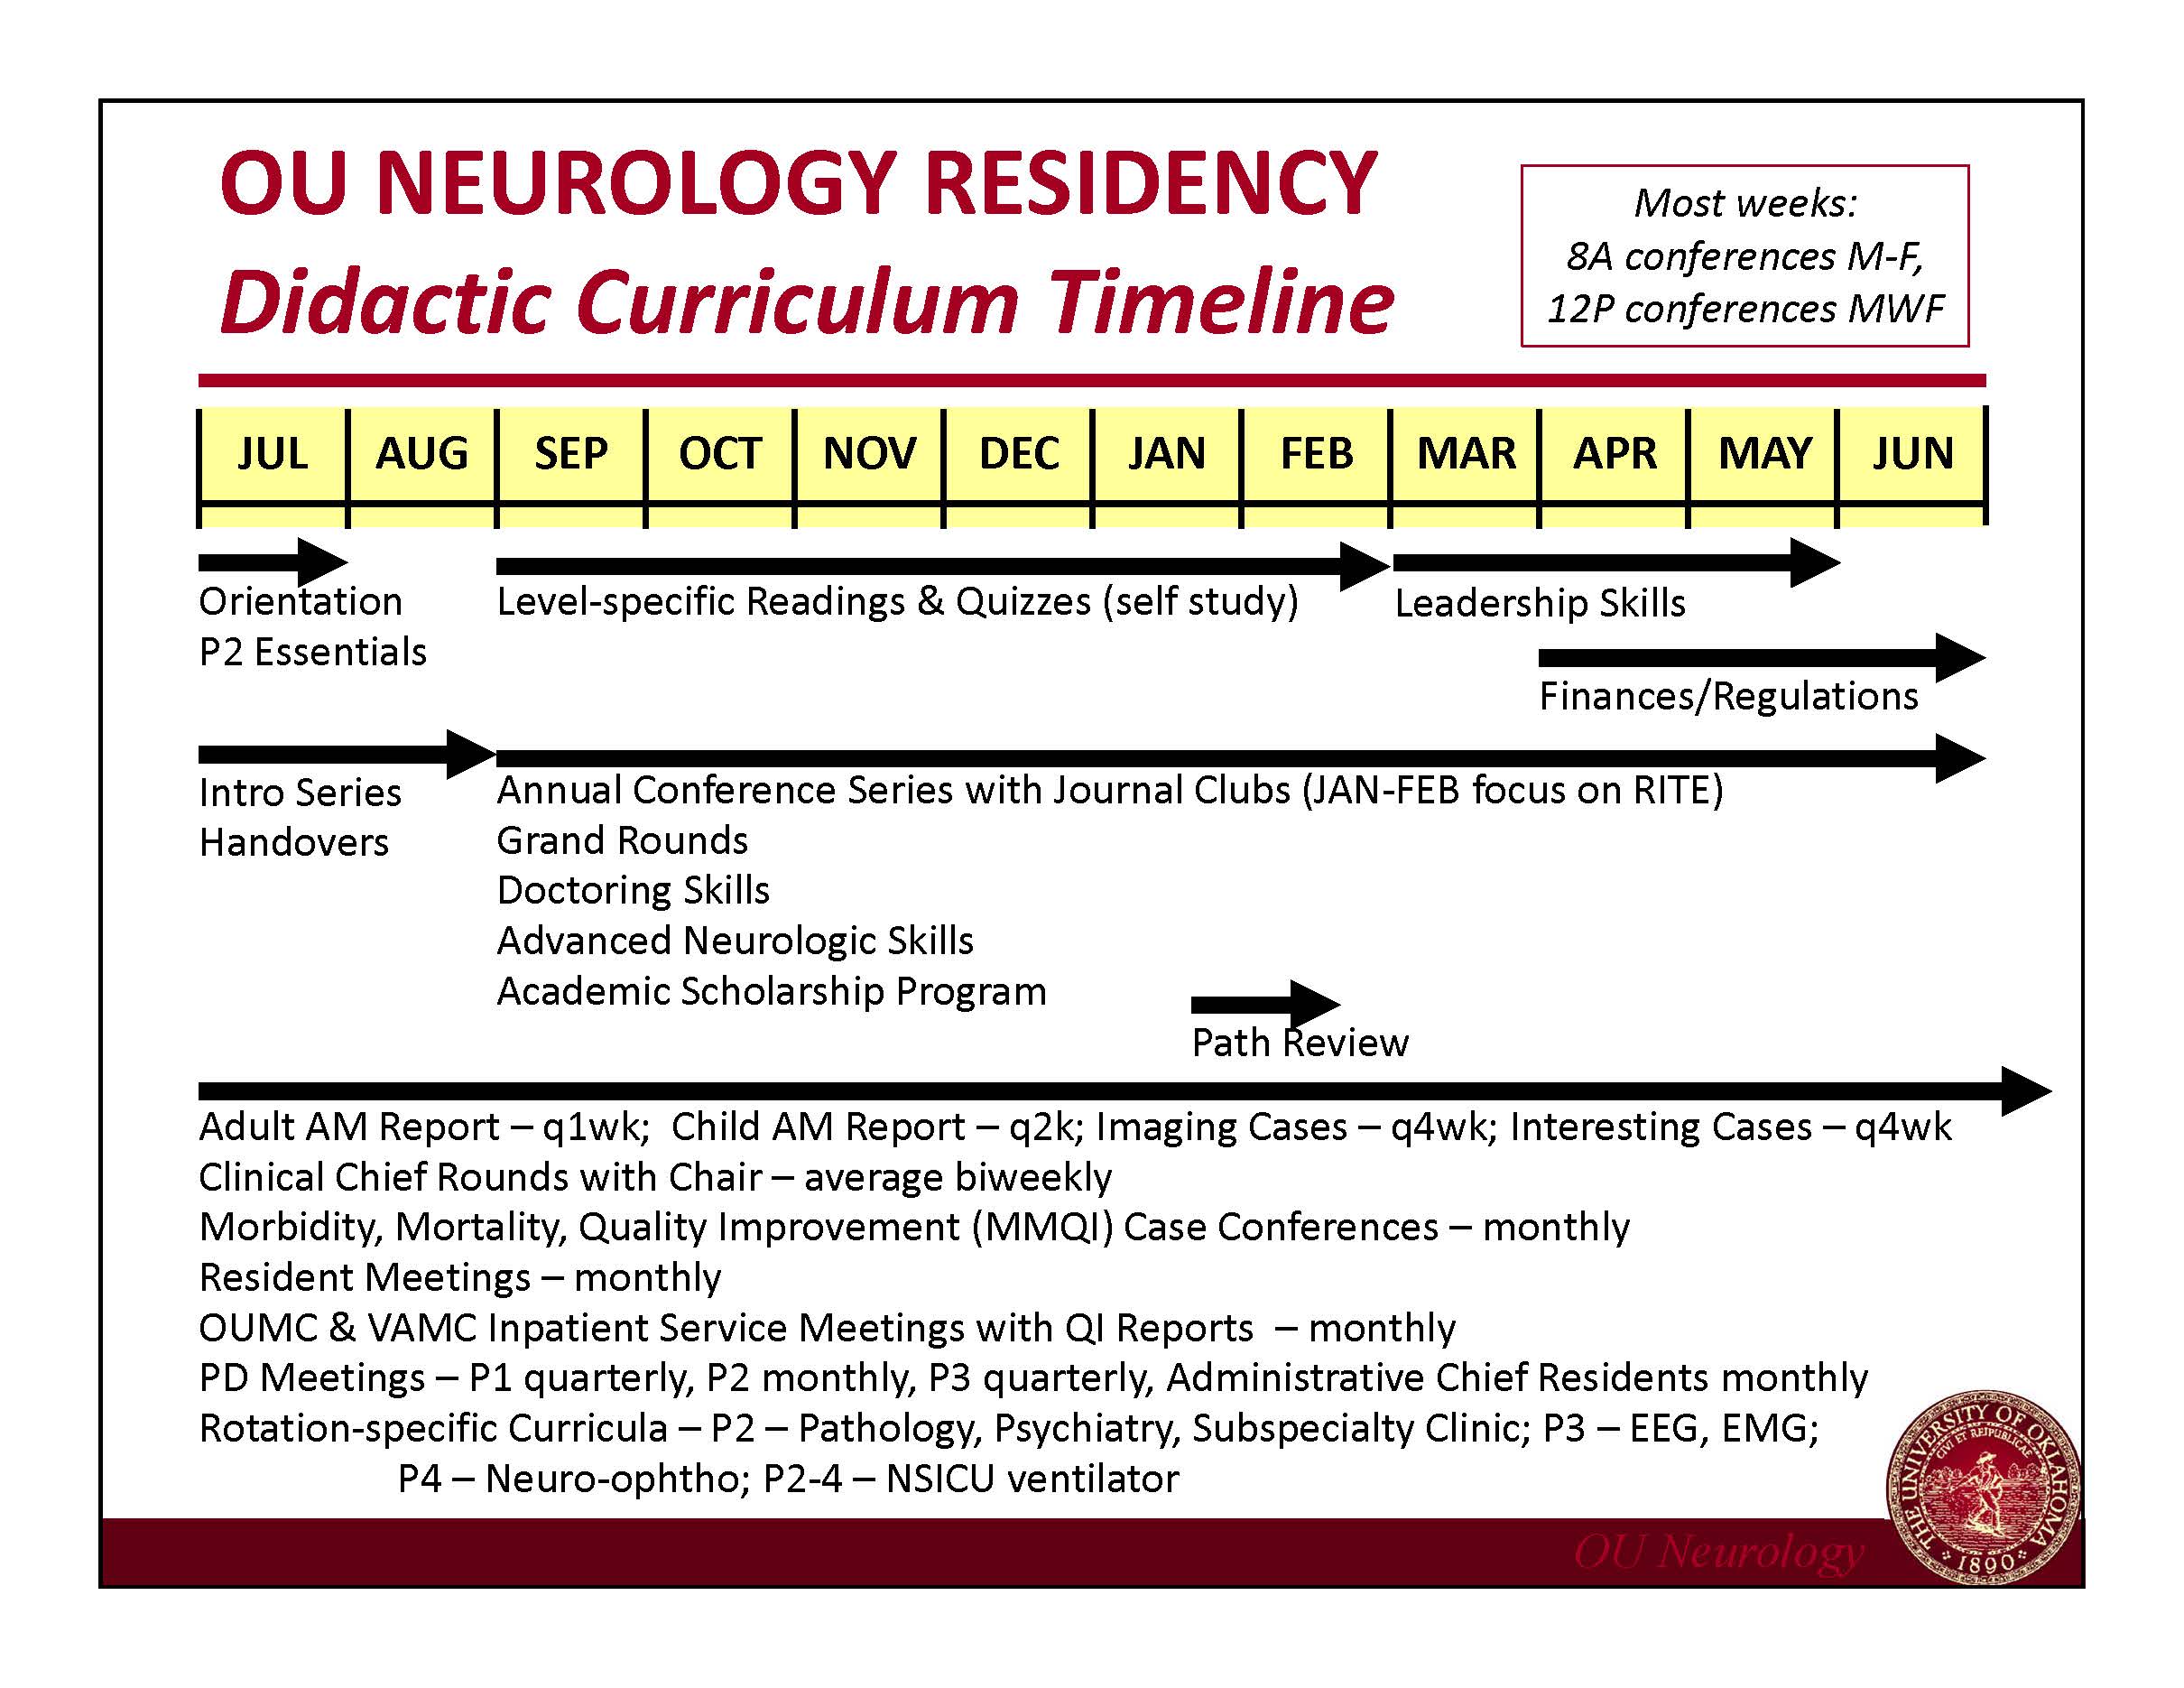 OU Neurology ResidencyDidactic Curriculum Timeline2020-2021